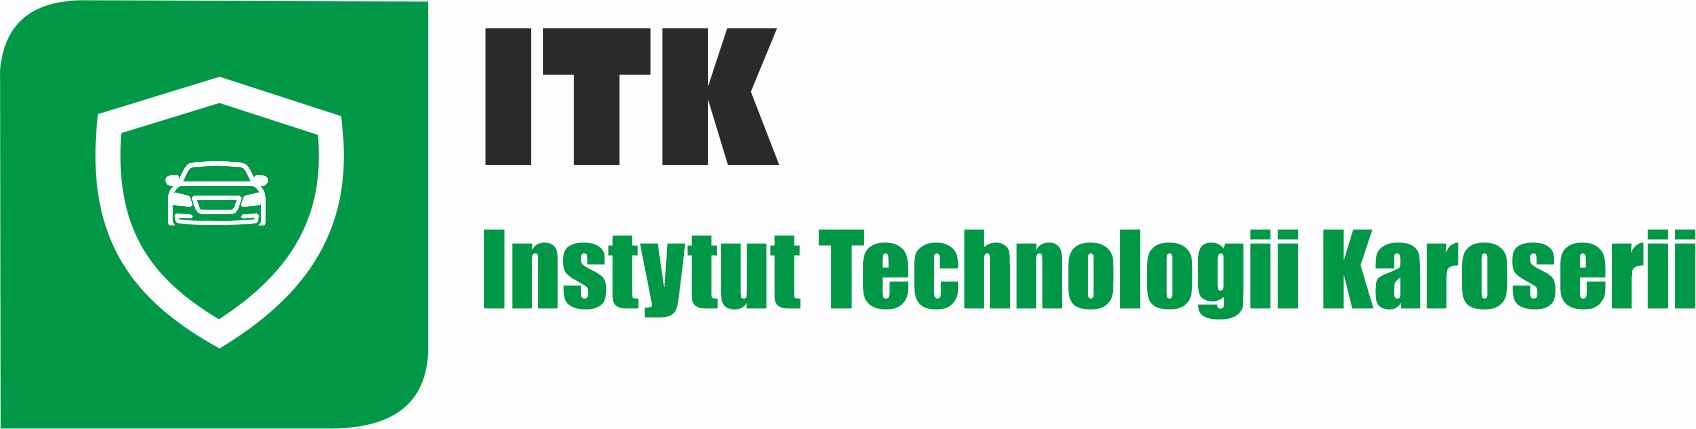 logo-itk